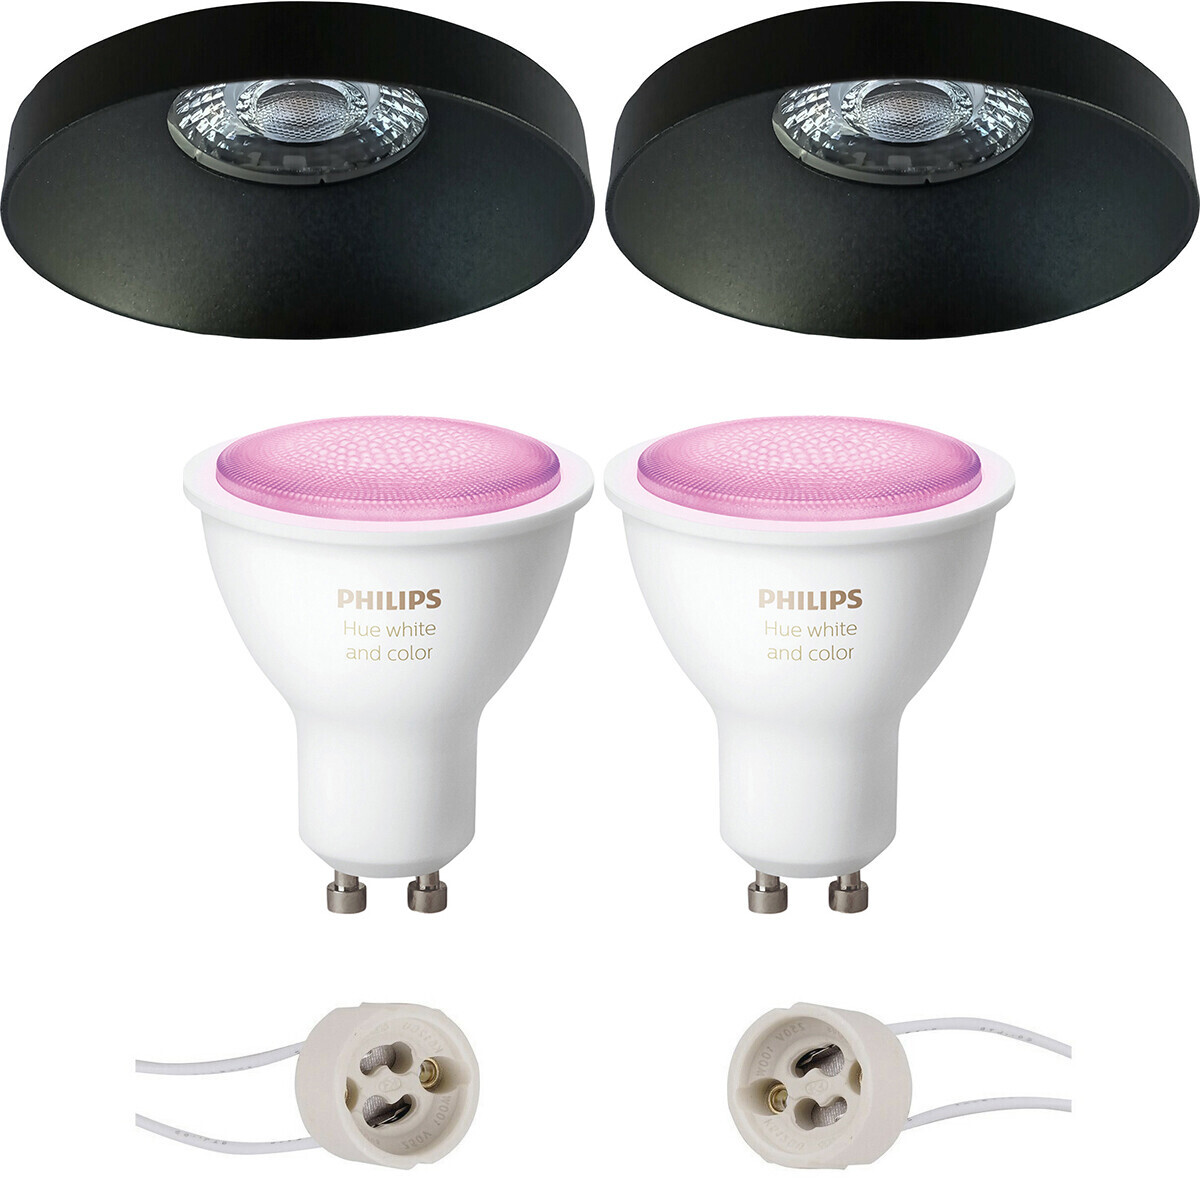 BES LED Pragmi Vrito Pro - Inbouw Rond - Mat Zwart - Ø82mm - Philips Hue - LED Spot Set GU10 - White and Color Ambiance - Bluetooth